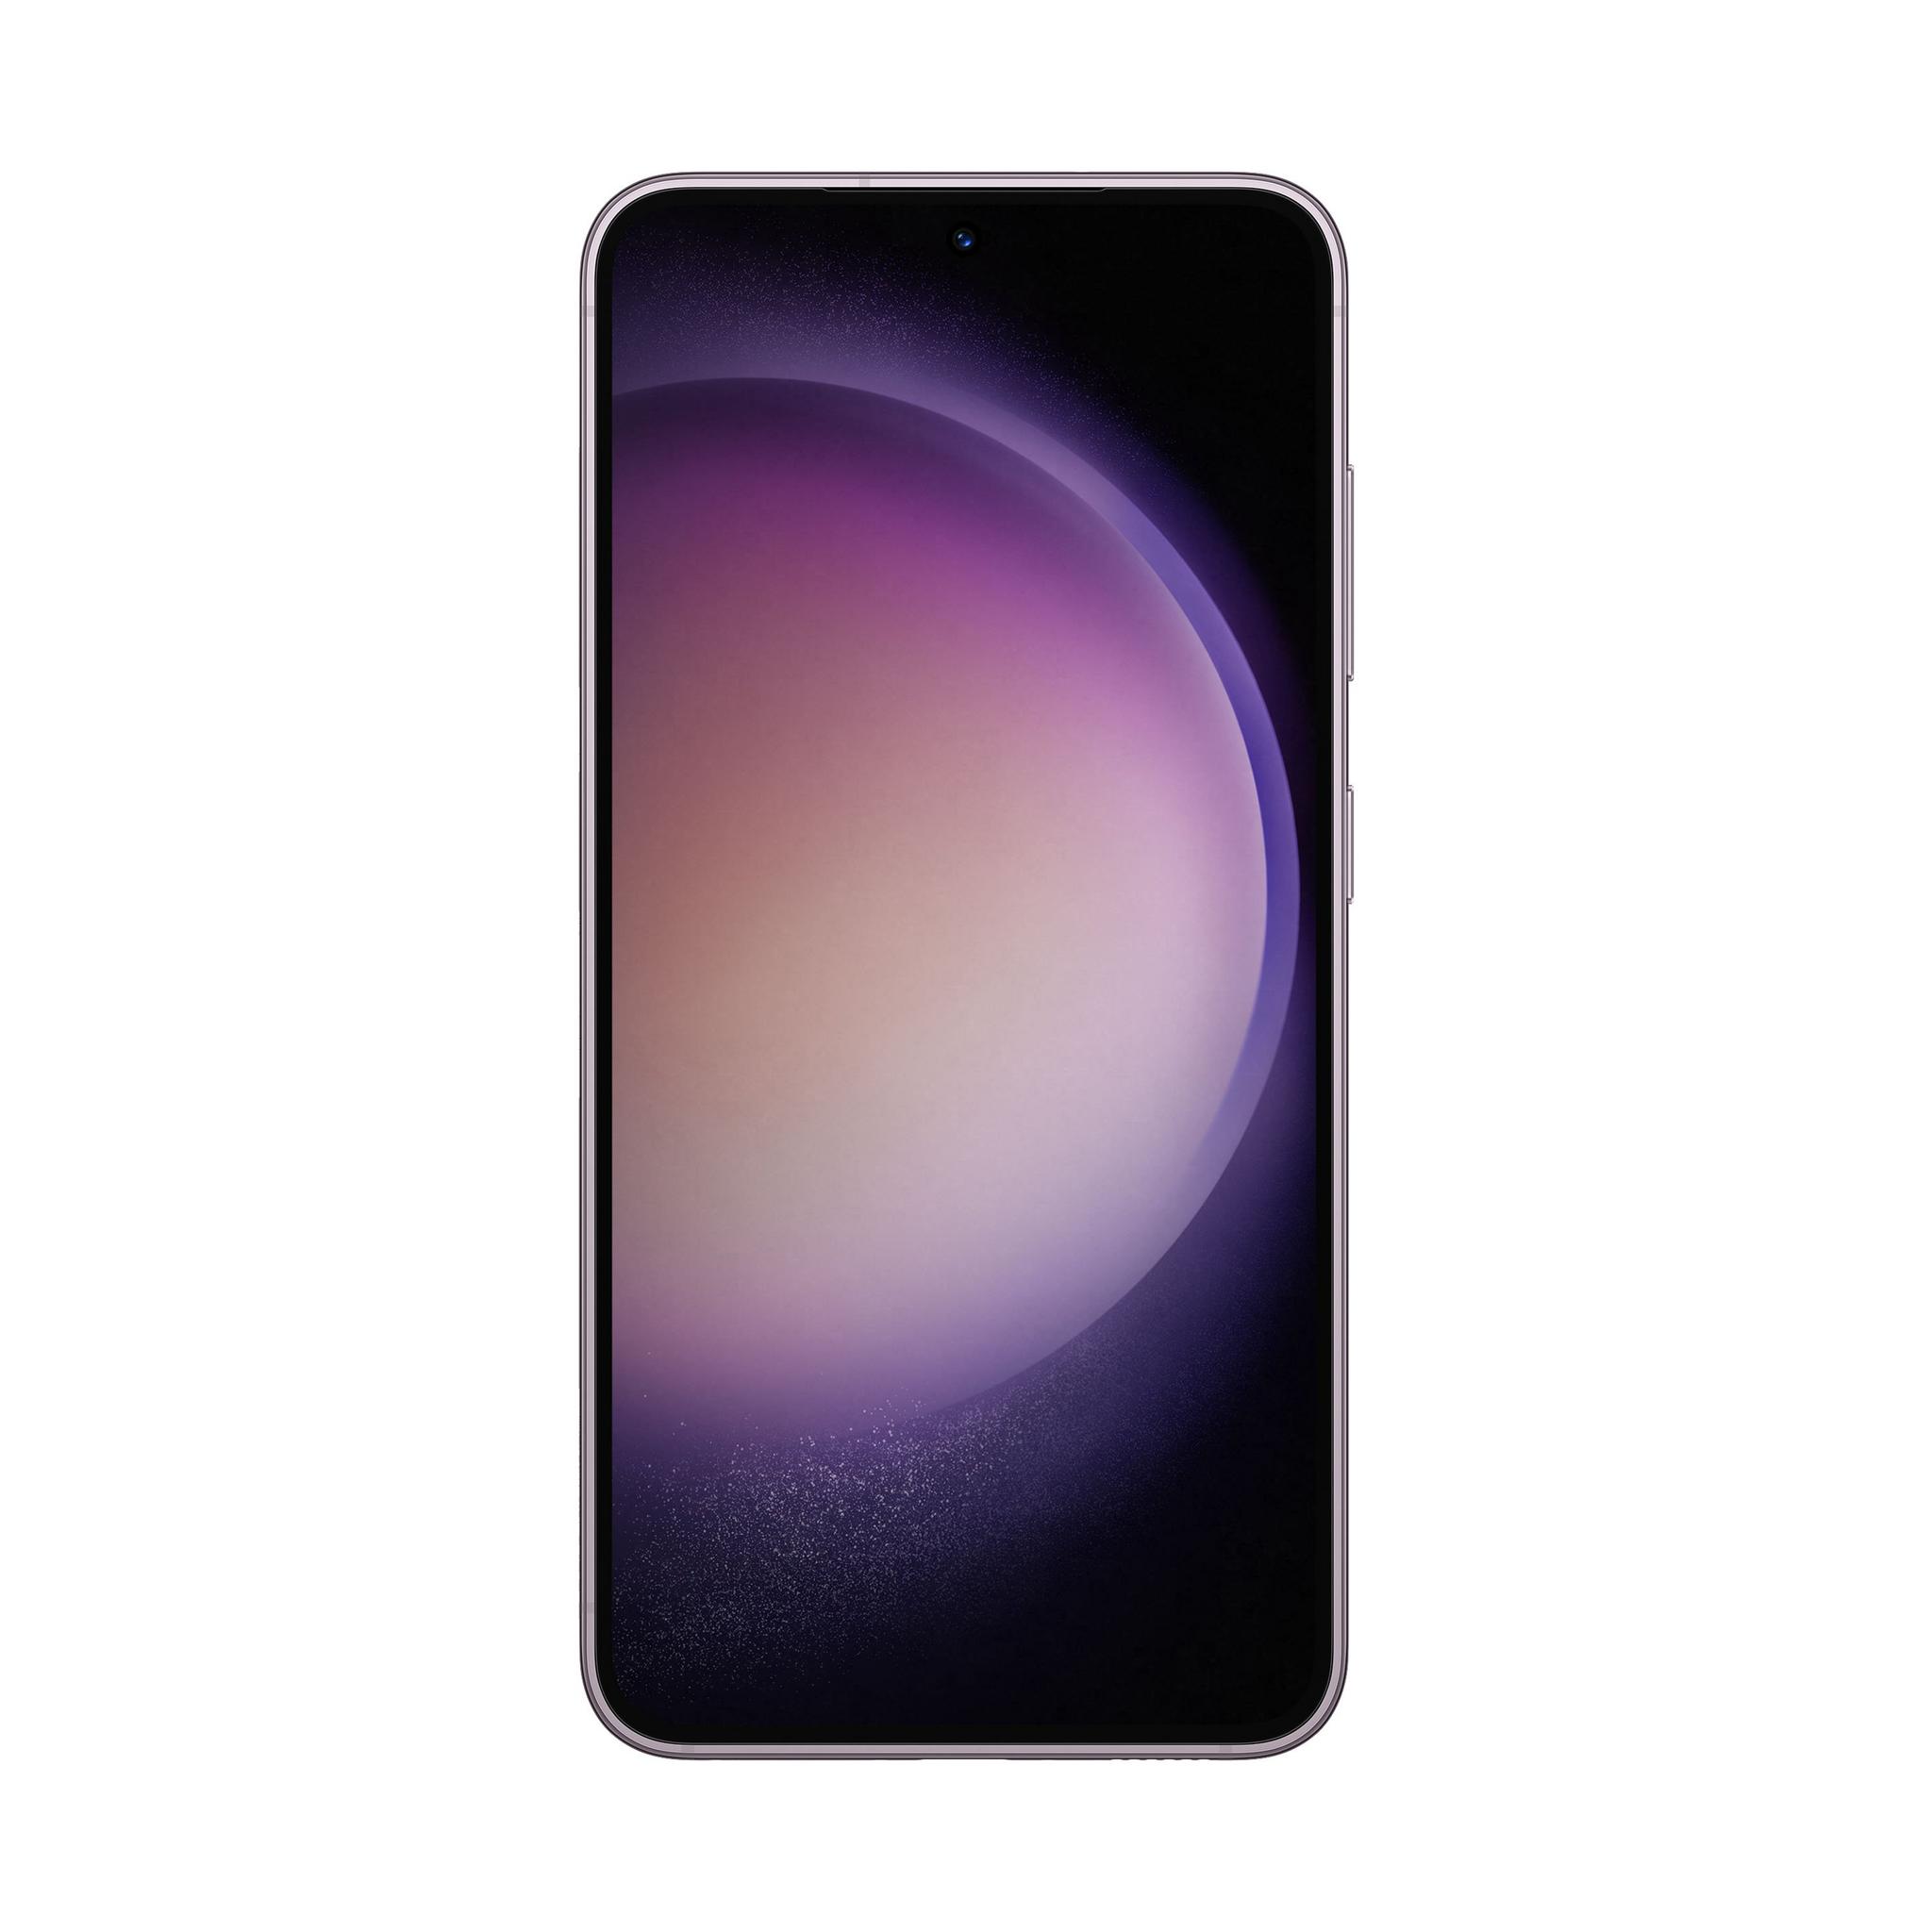 Samsung Galaxy S23 128GB Phone - Lavender